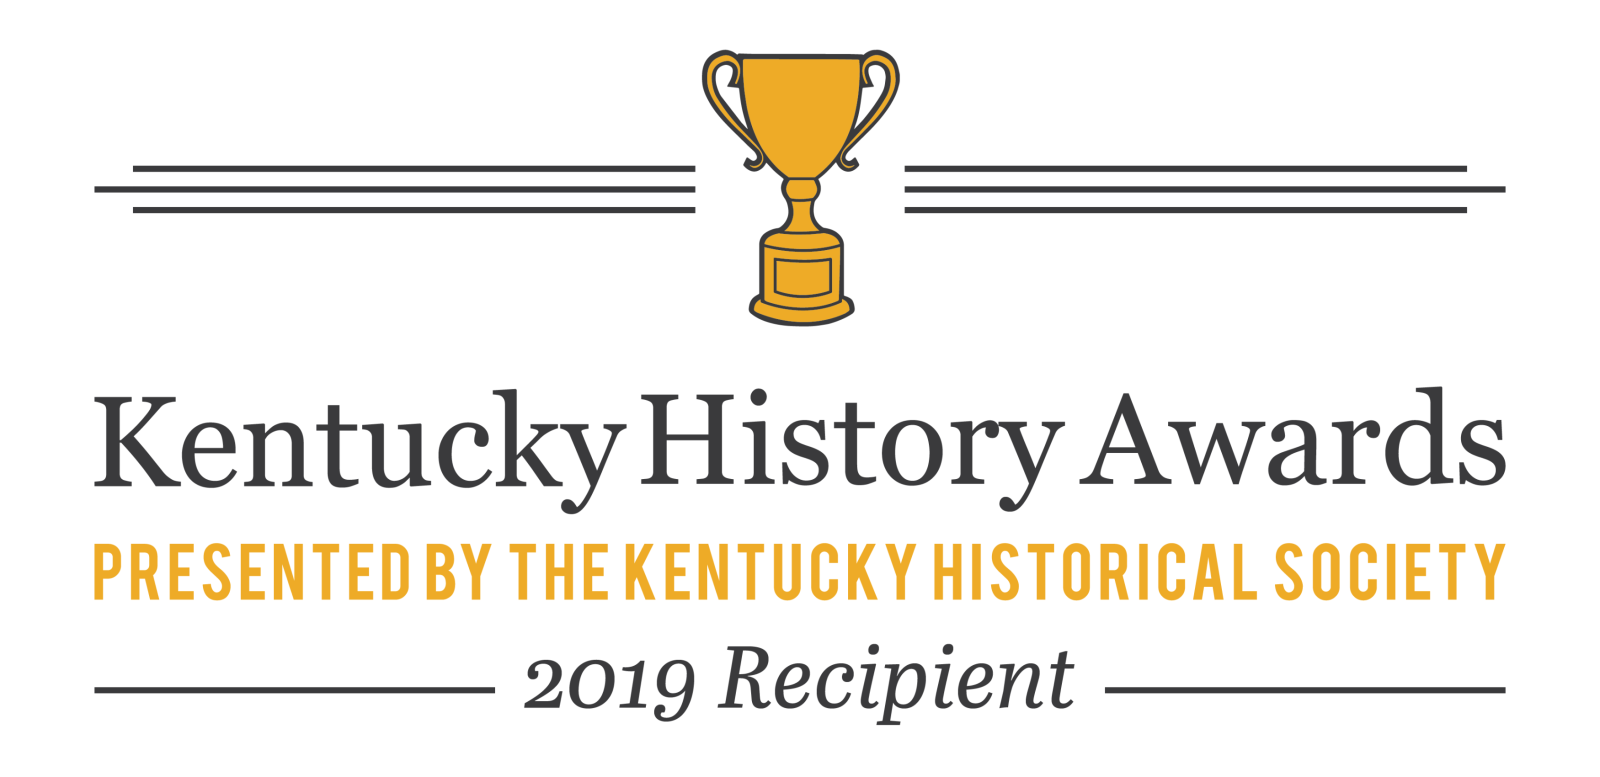 Kentucky History Awards Logo indicating 2019 Recipient